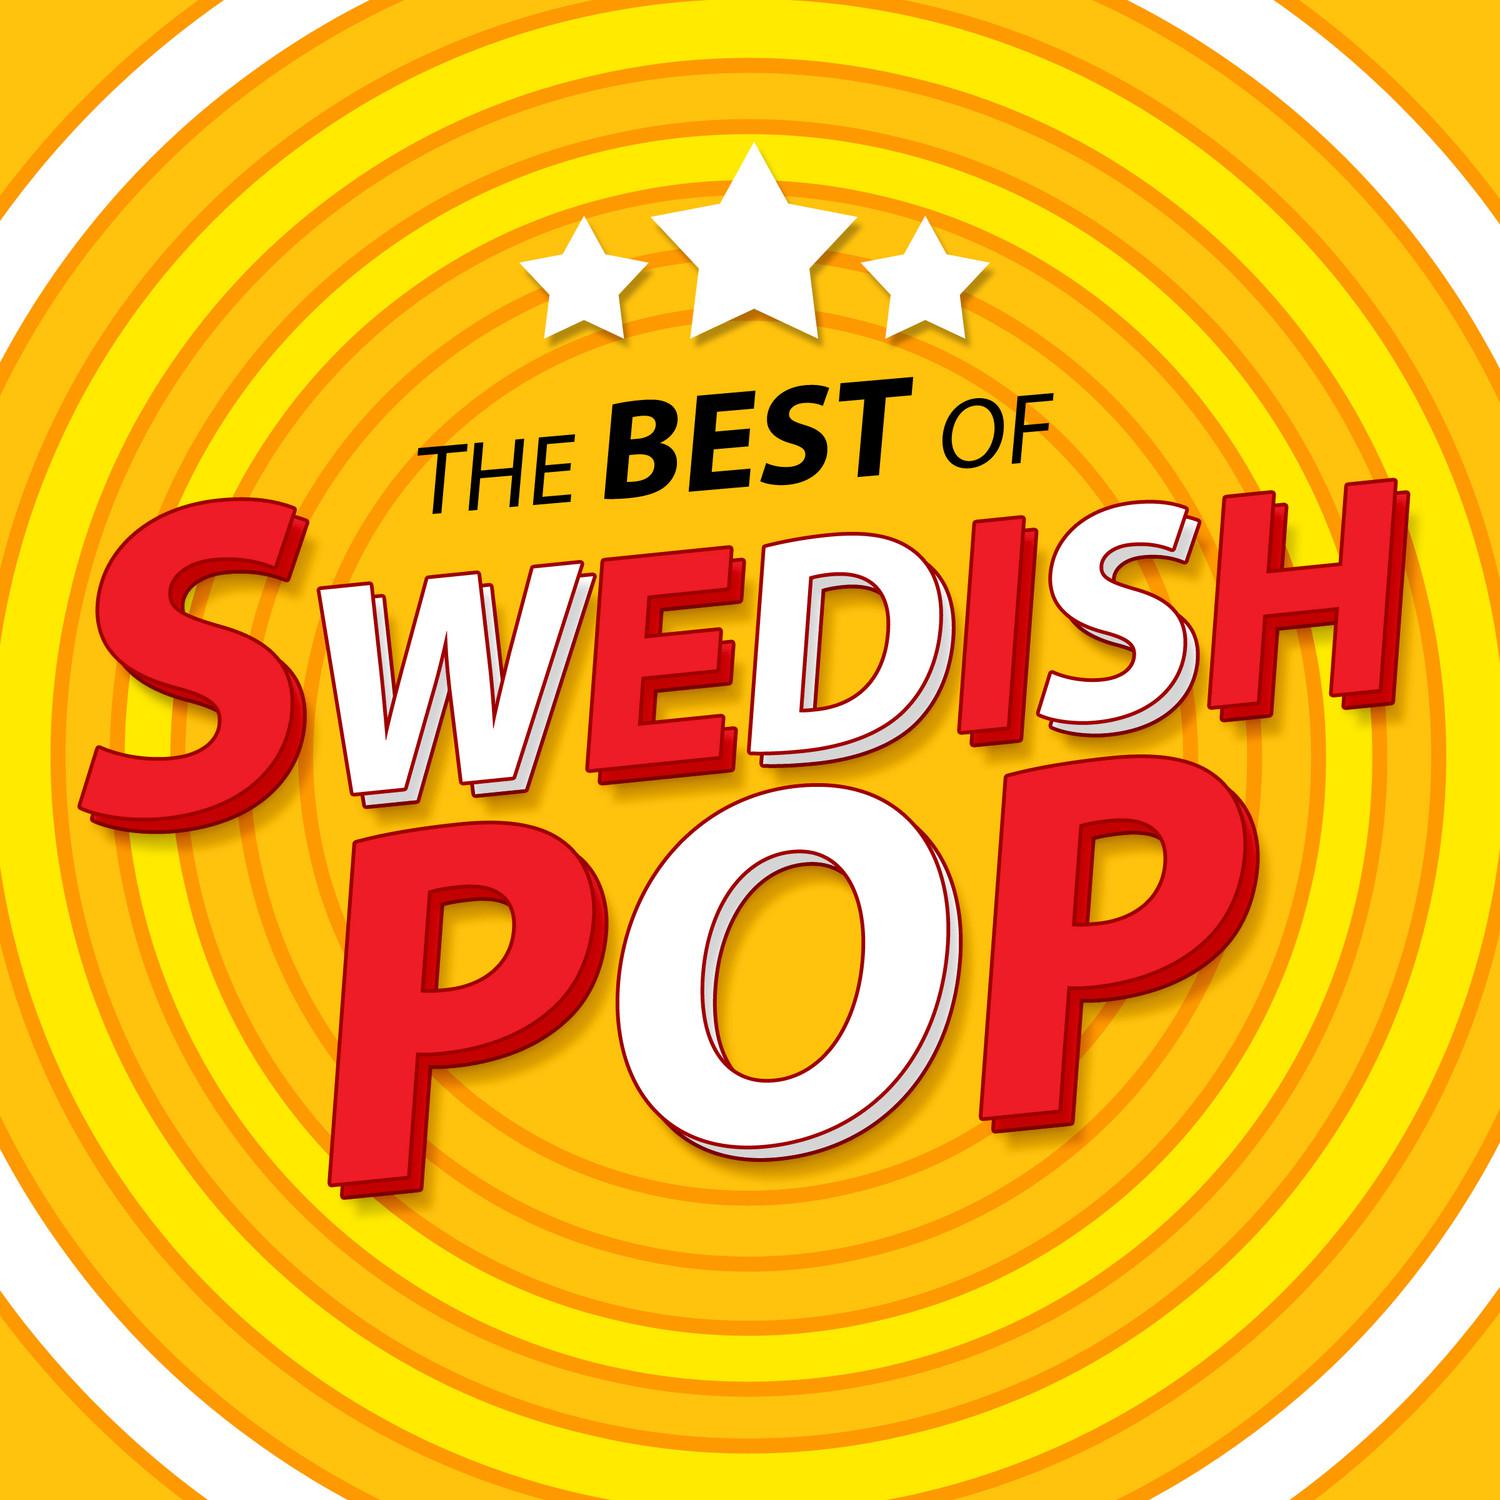 The Best of Swedish Pop